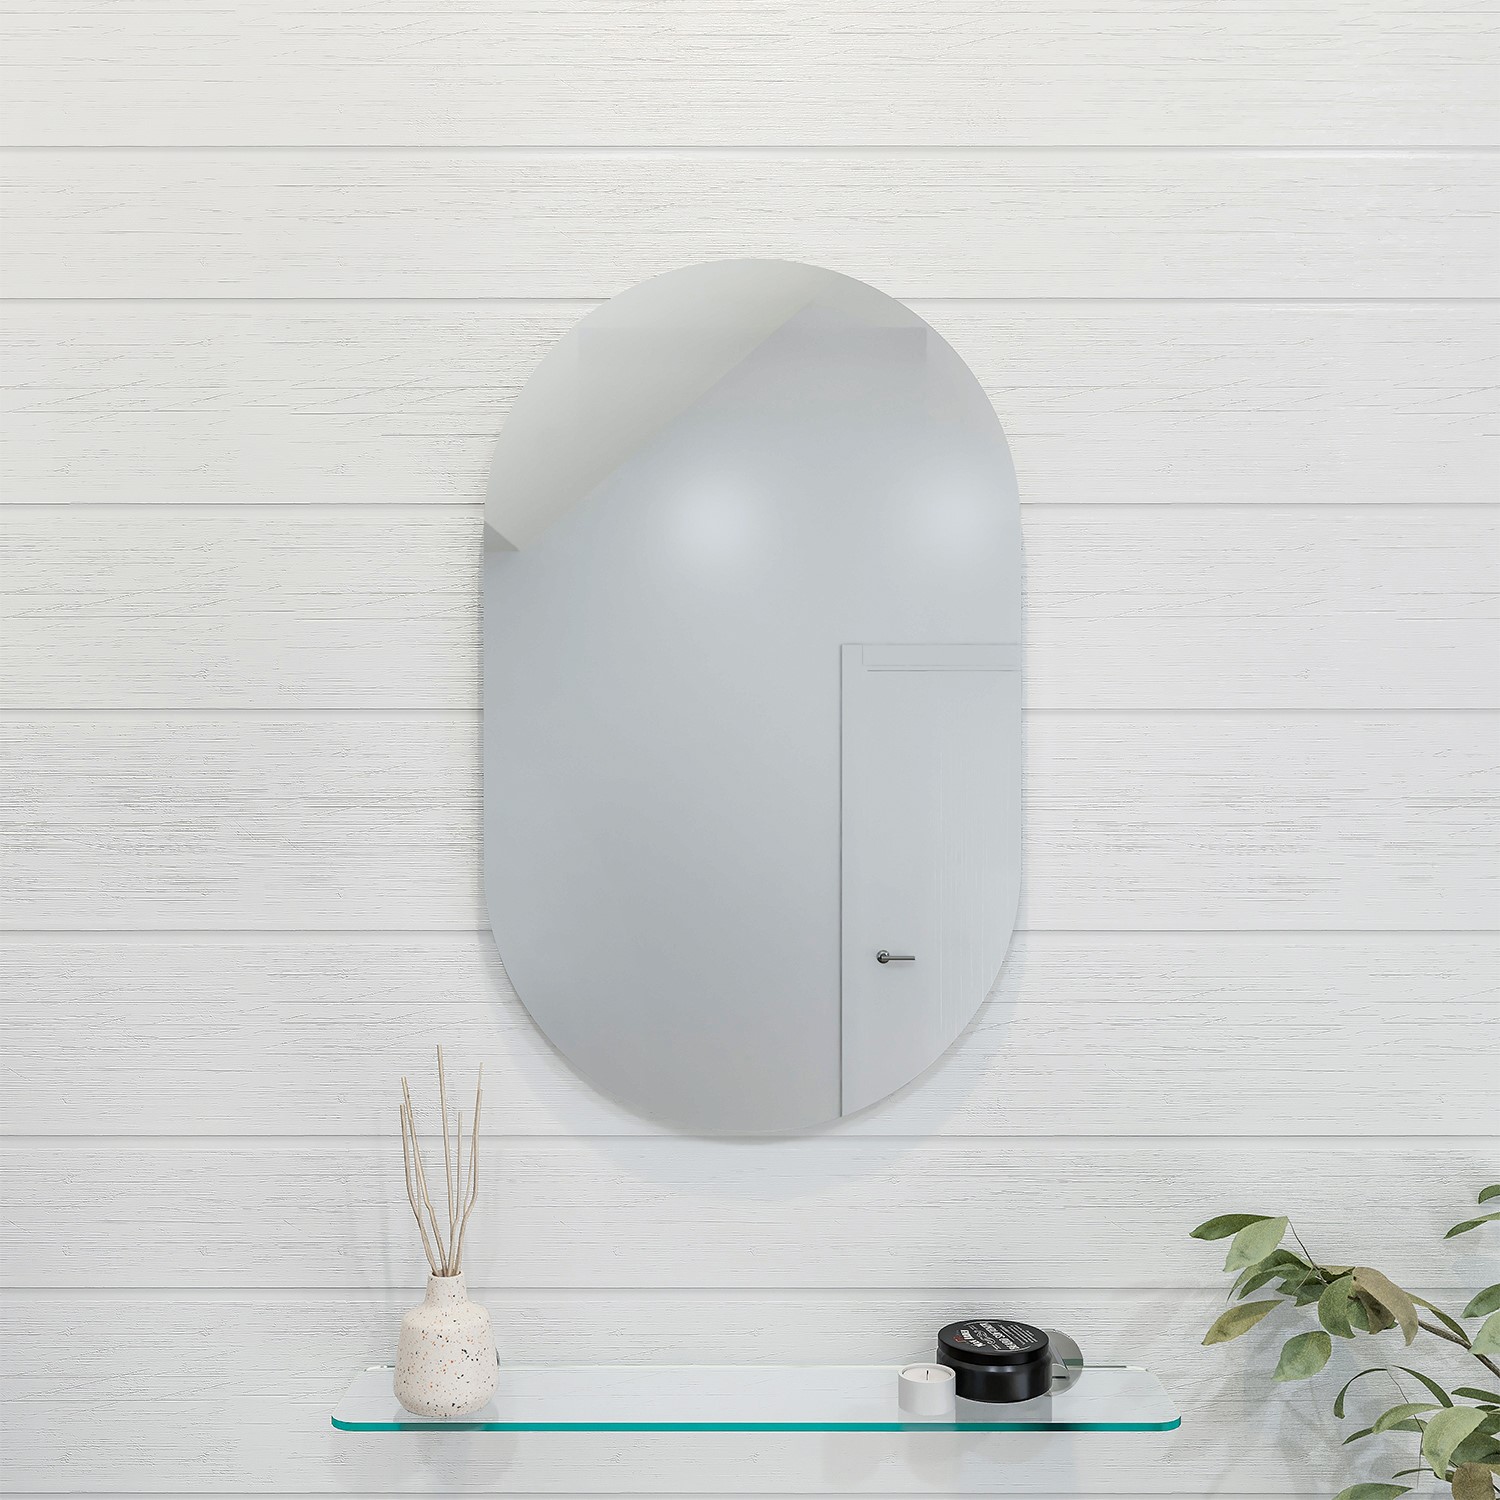 Oval Hang N Lock Bathroom Mirror 400 X, What Size Oval Mirror For Bathroom